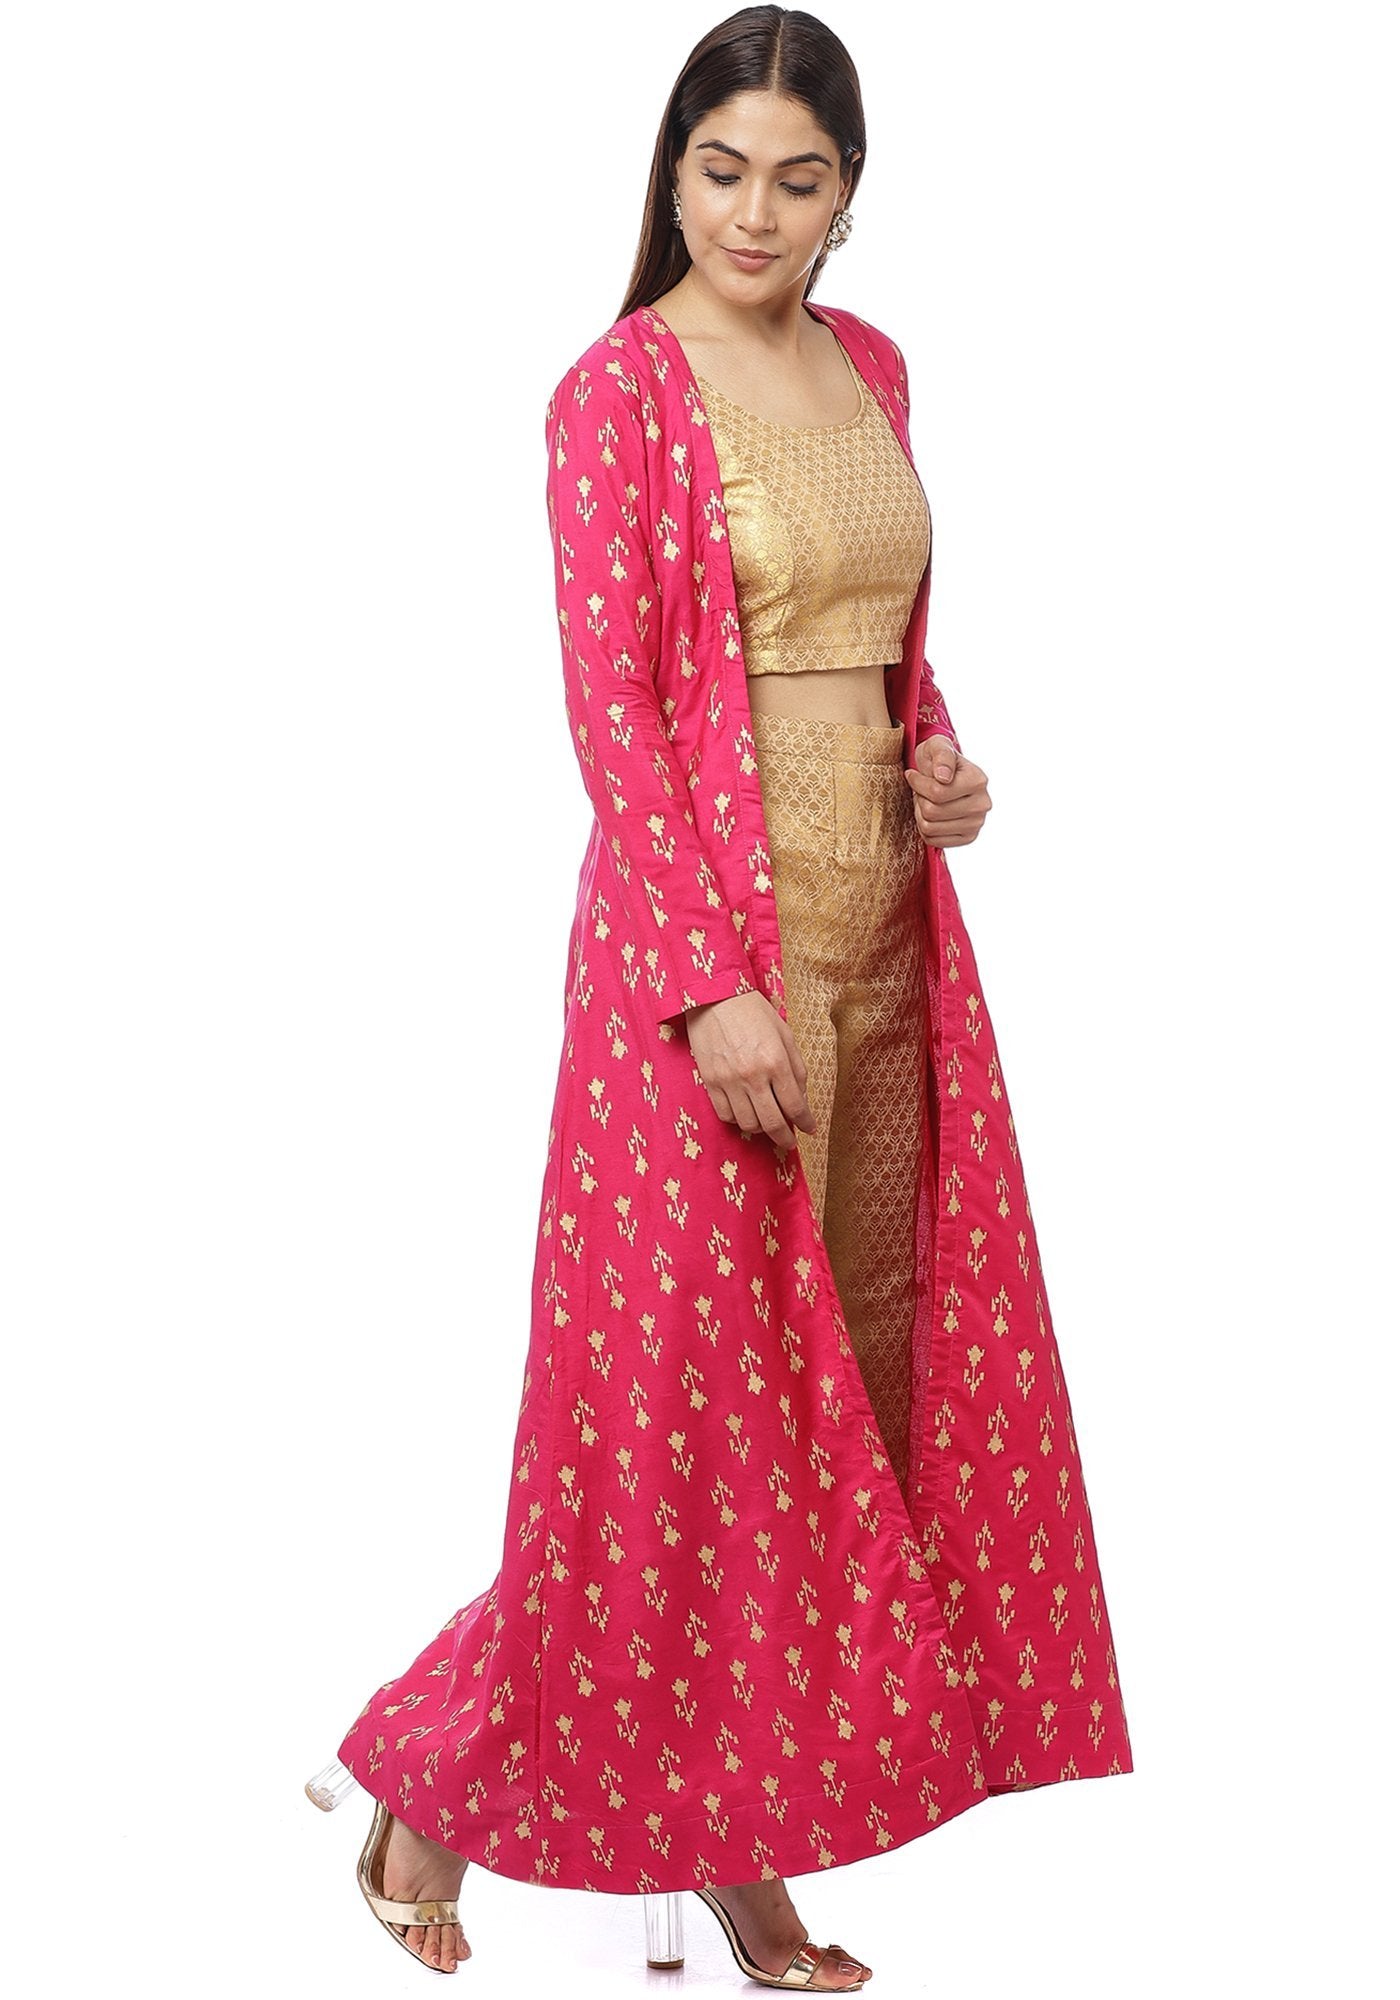 anokherang combos pixie pink jacket style kurti with gold brocade blouse and palazzo 14554018807939